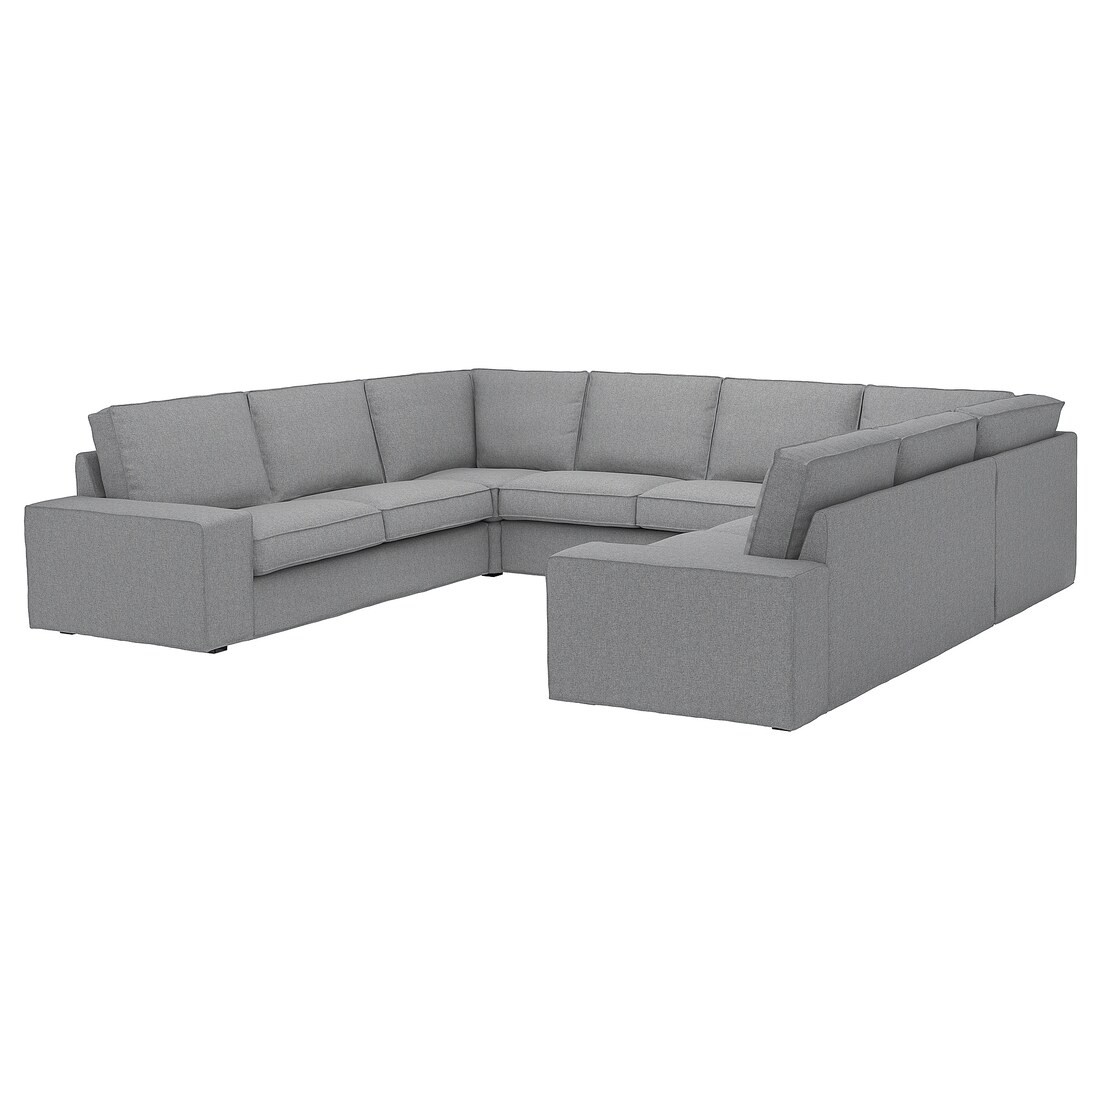 KIVIK КИВИК П-образный диван, 6-местный, Tibbleby бежевый / серый